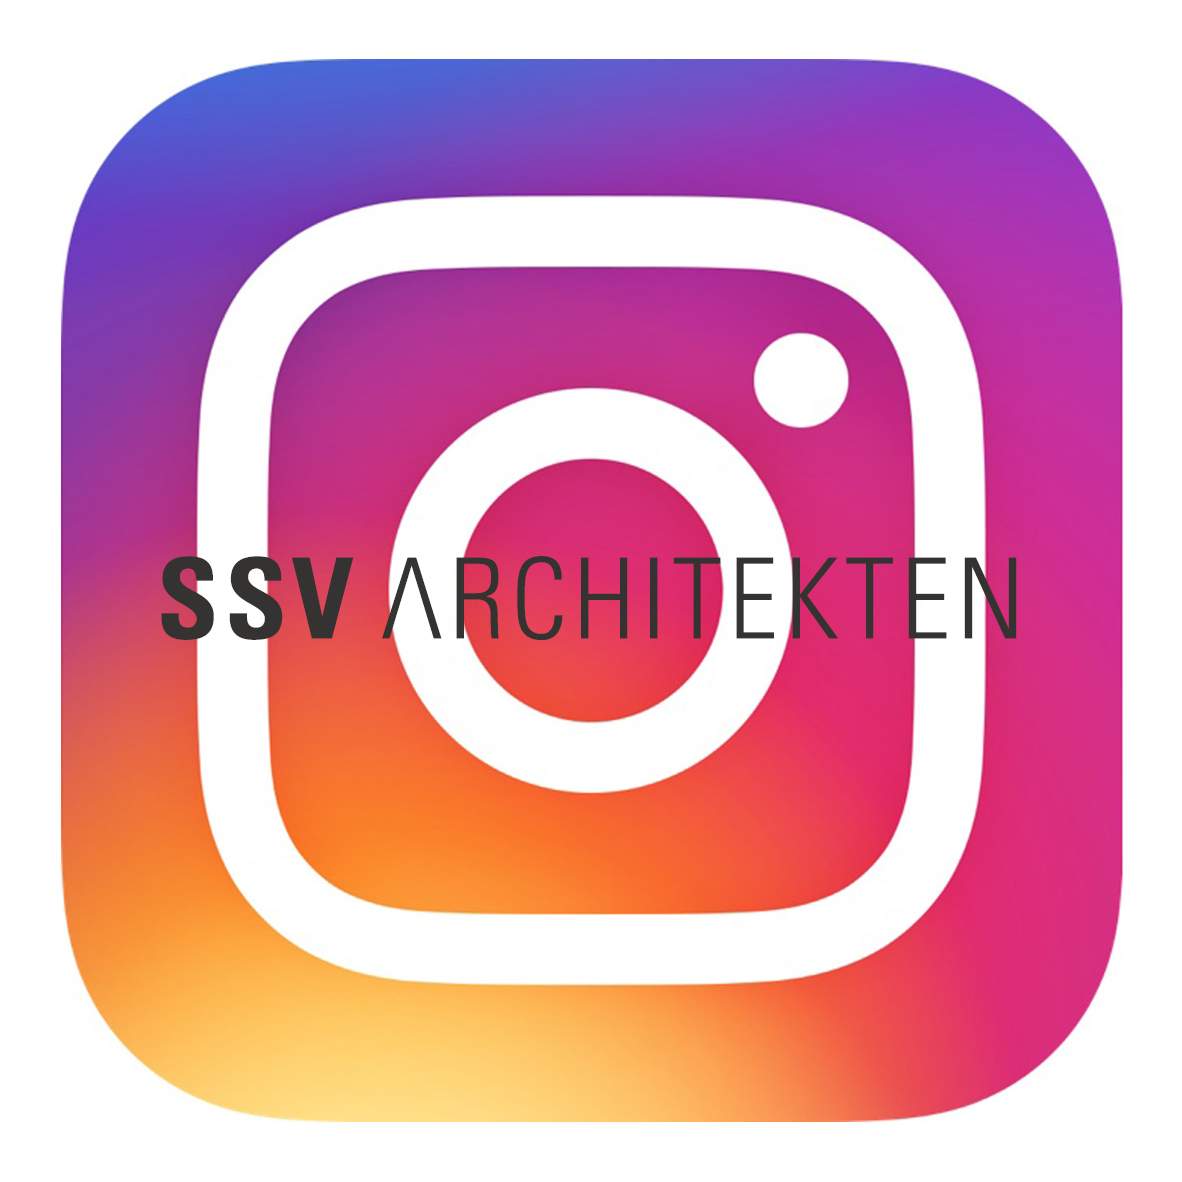 August: SSV goes Instagram